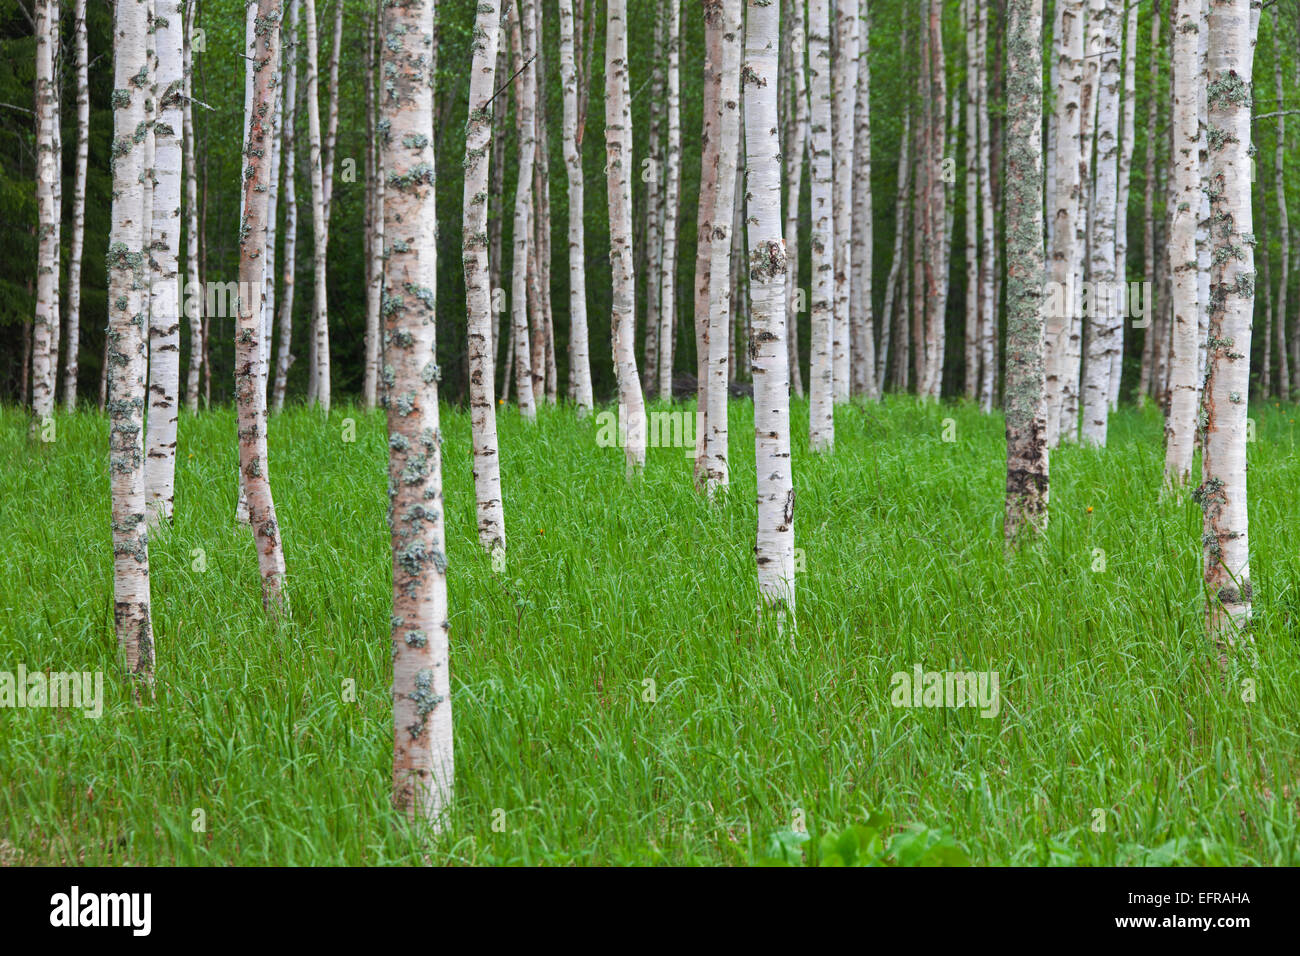 Argento / betulla presenta verrucosa betulla (Betula pendula / betula alba / Betula verrucosa) tronchi di betulle nel bosco di latifoglie Foto Stock